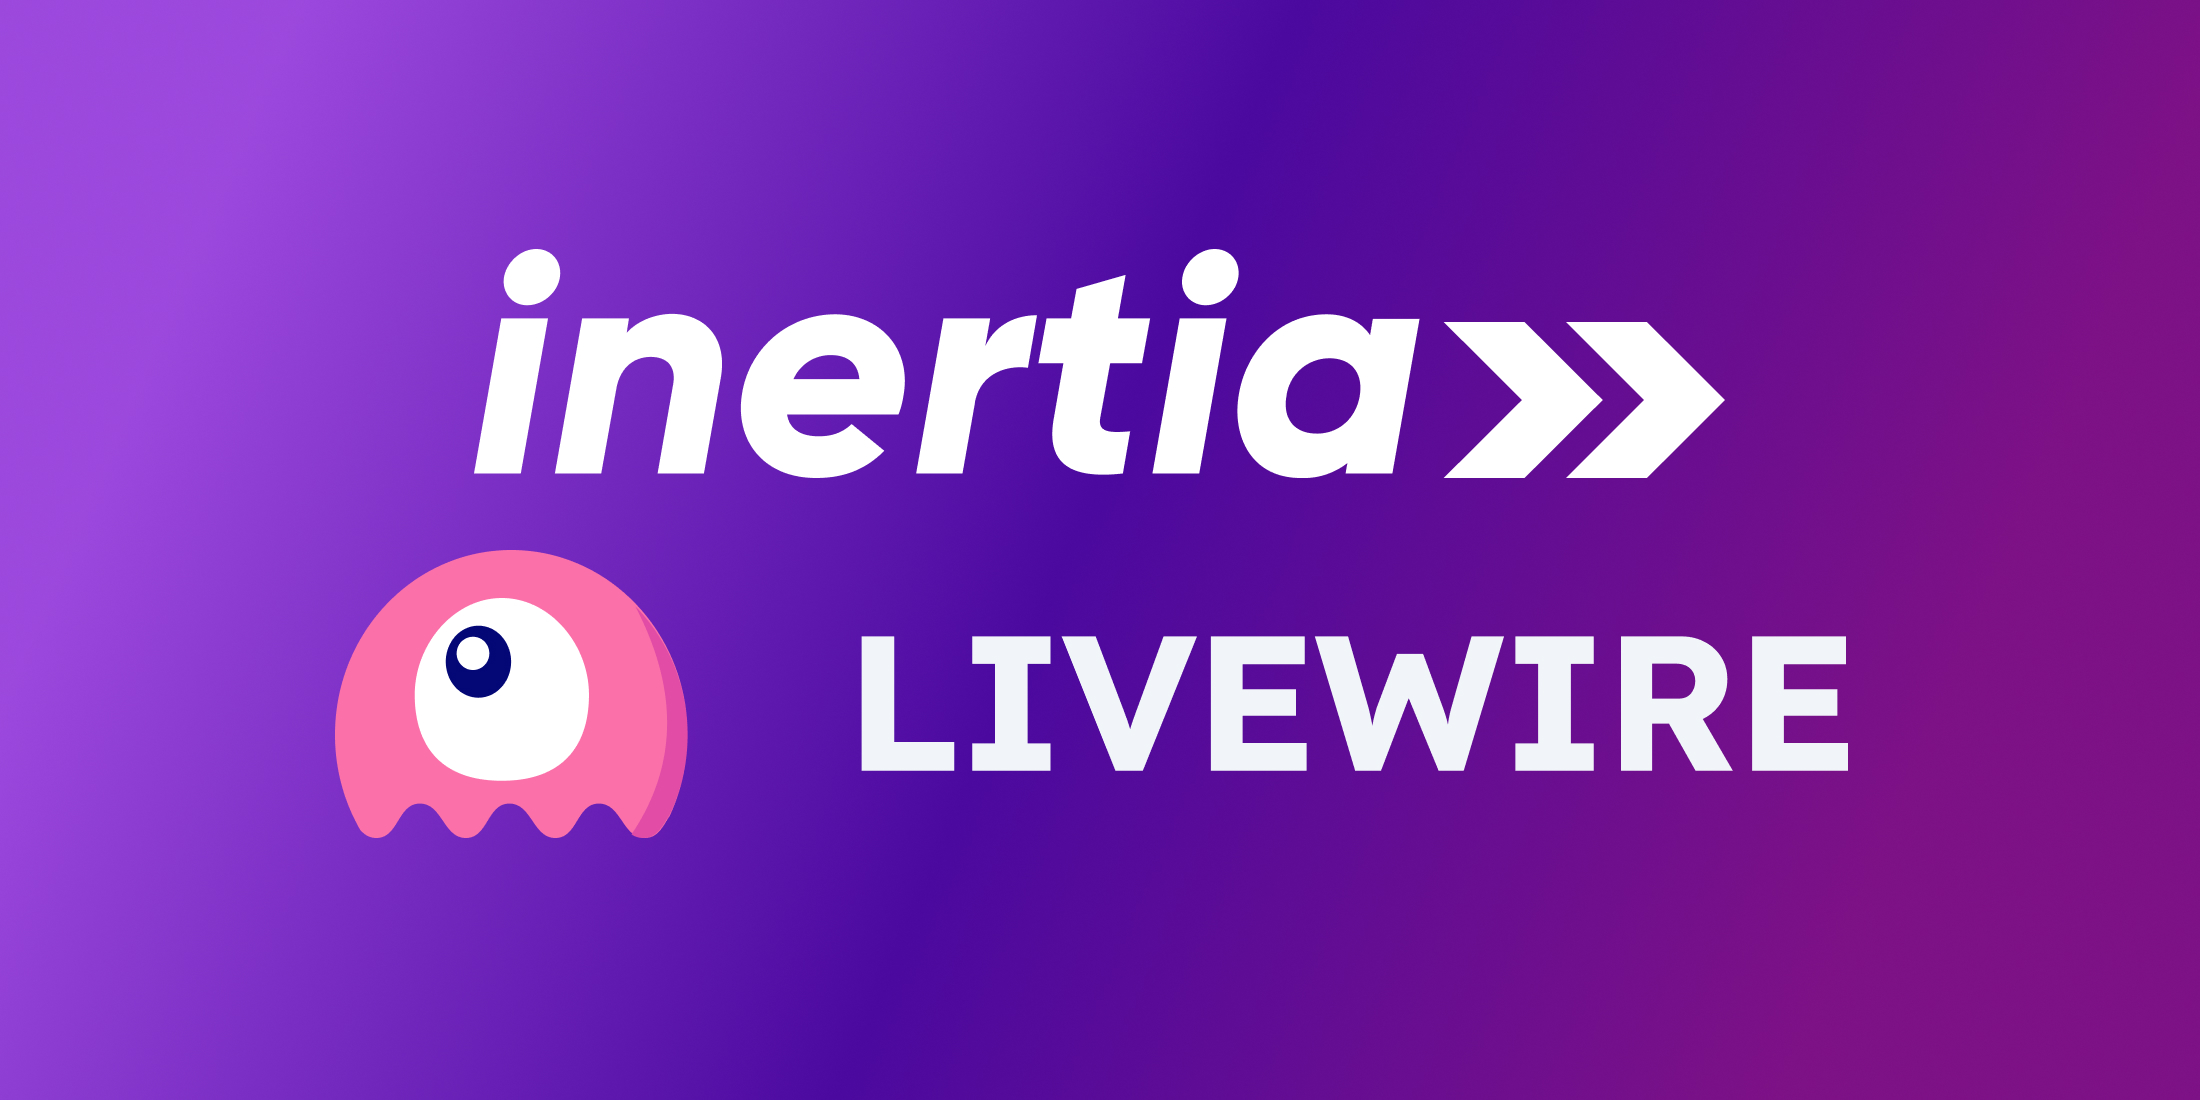 Inertia vs Livewire image